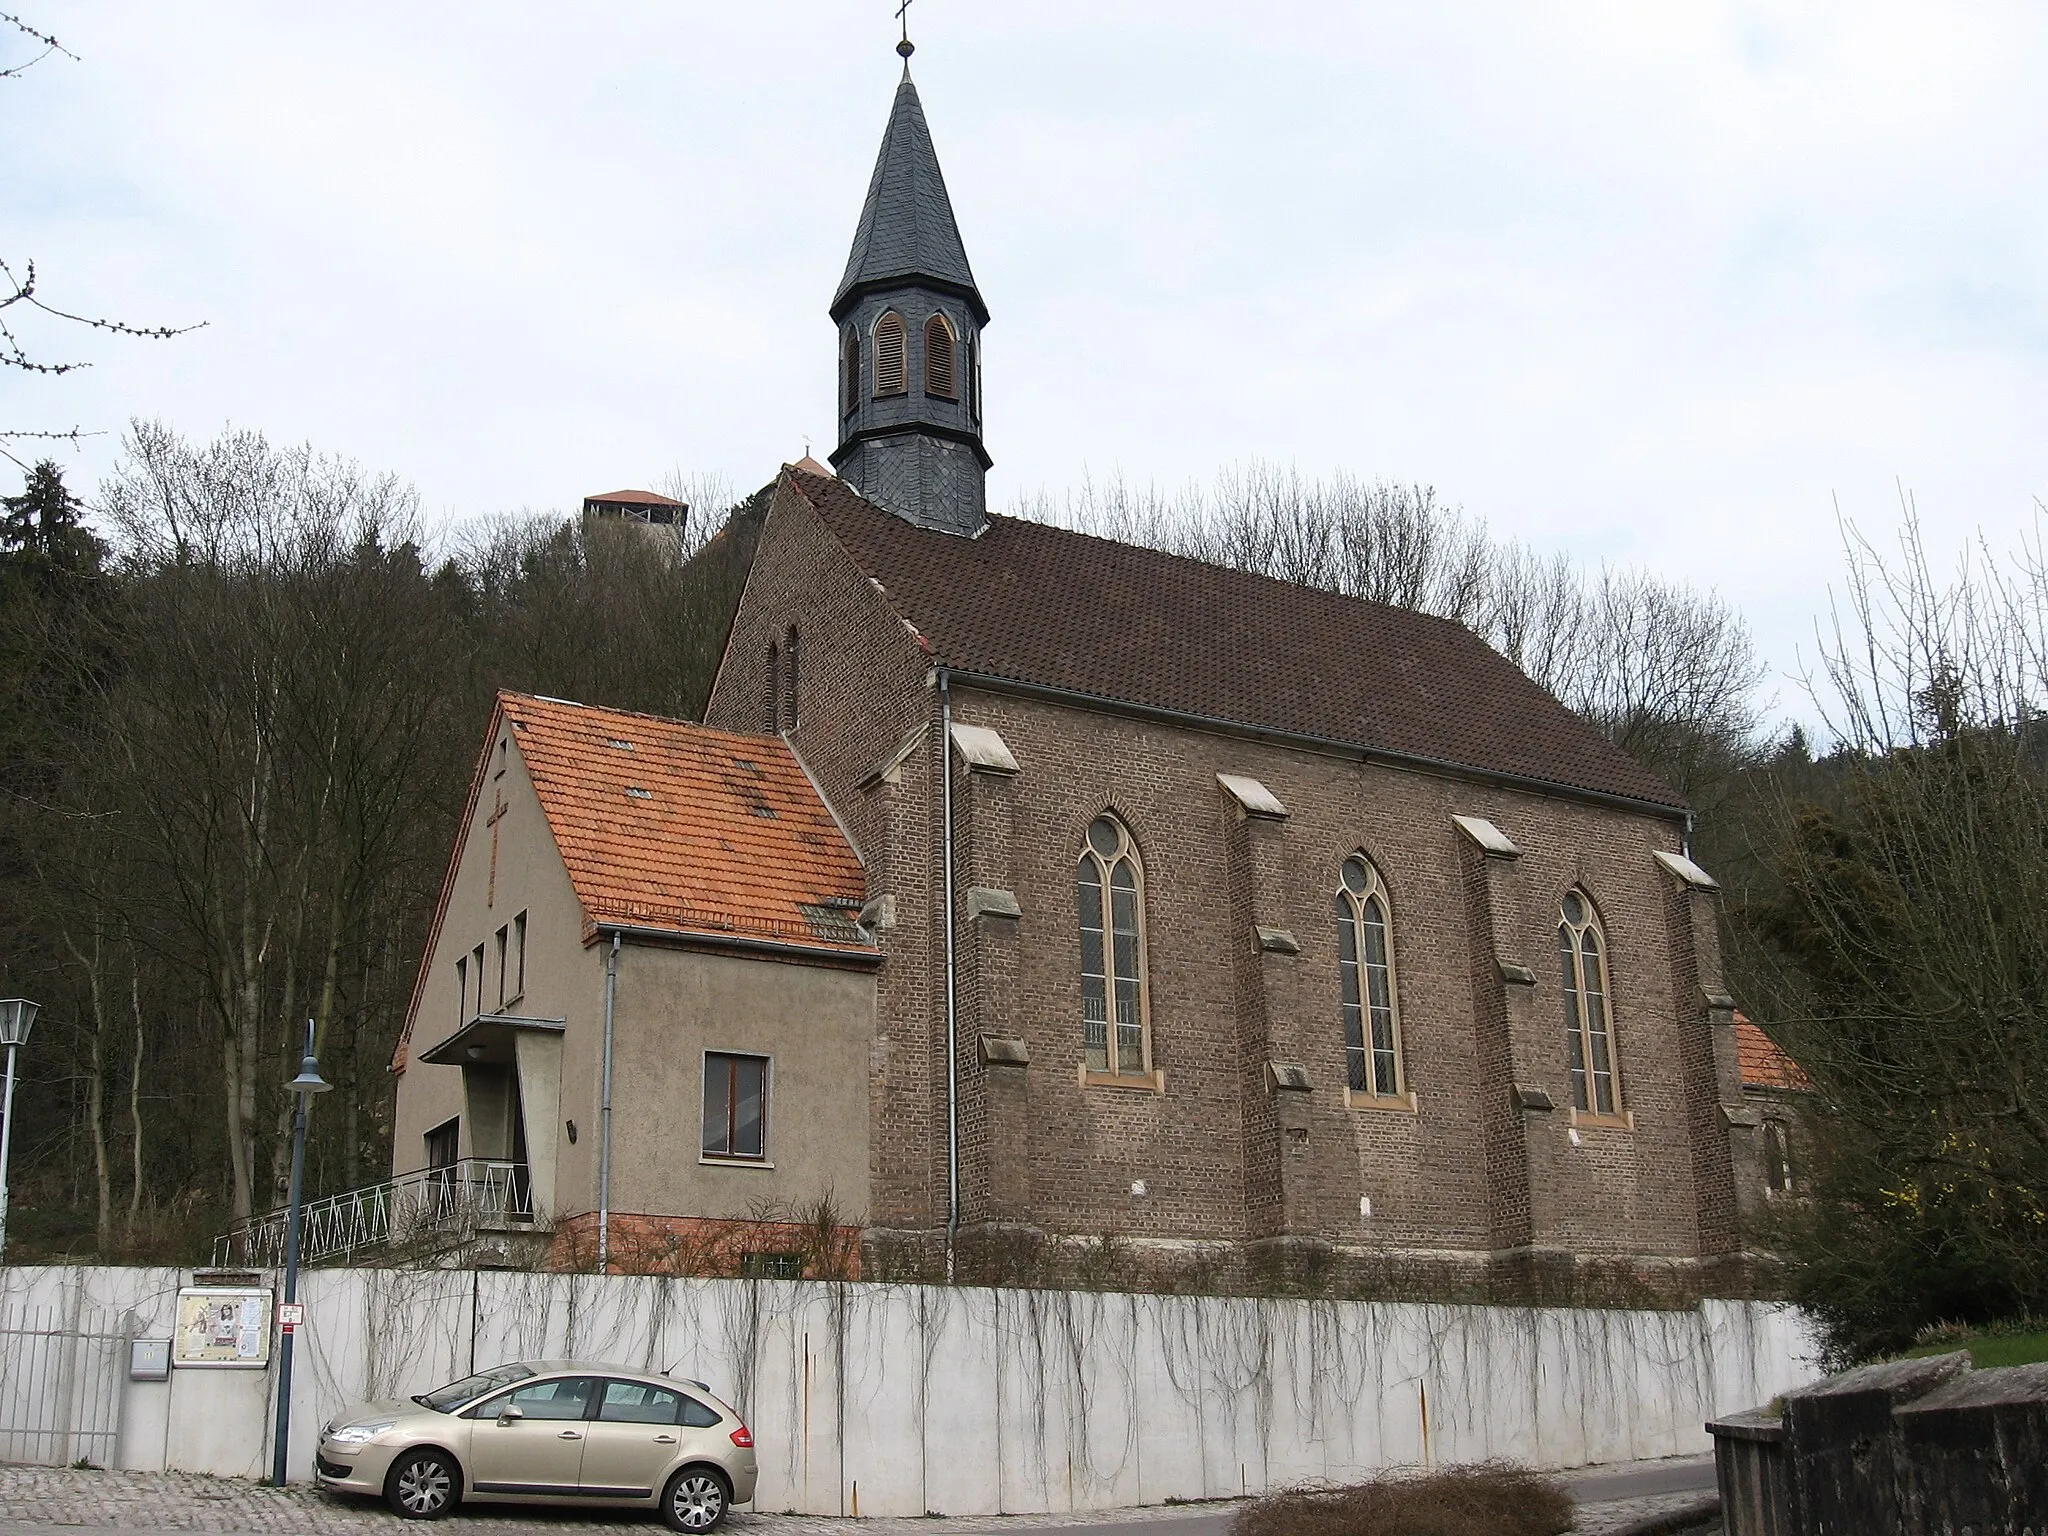 Photo showing: Treffurt/Germany: katholische Kirche St. Marien

Treffurt/Germany: Church of St. Mary